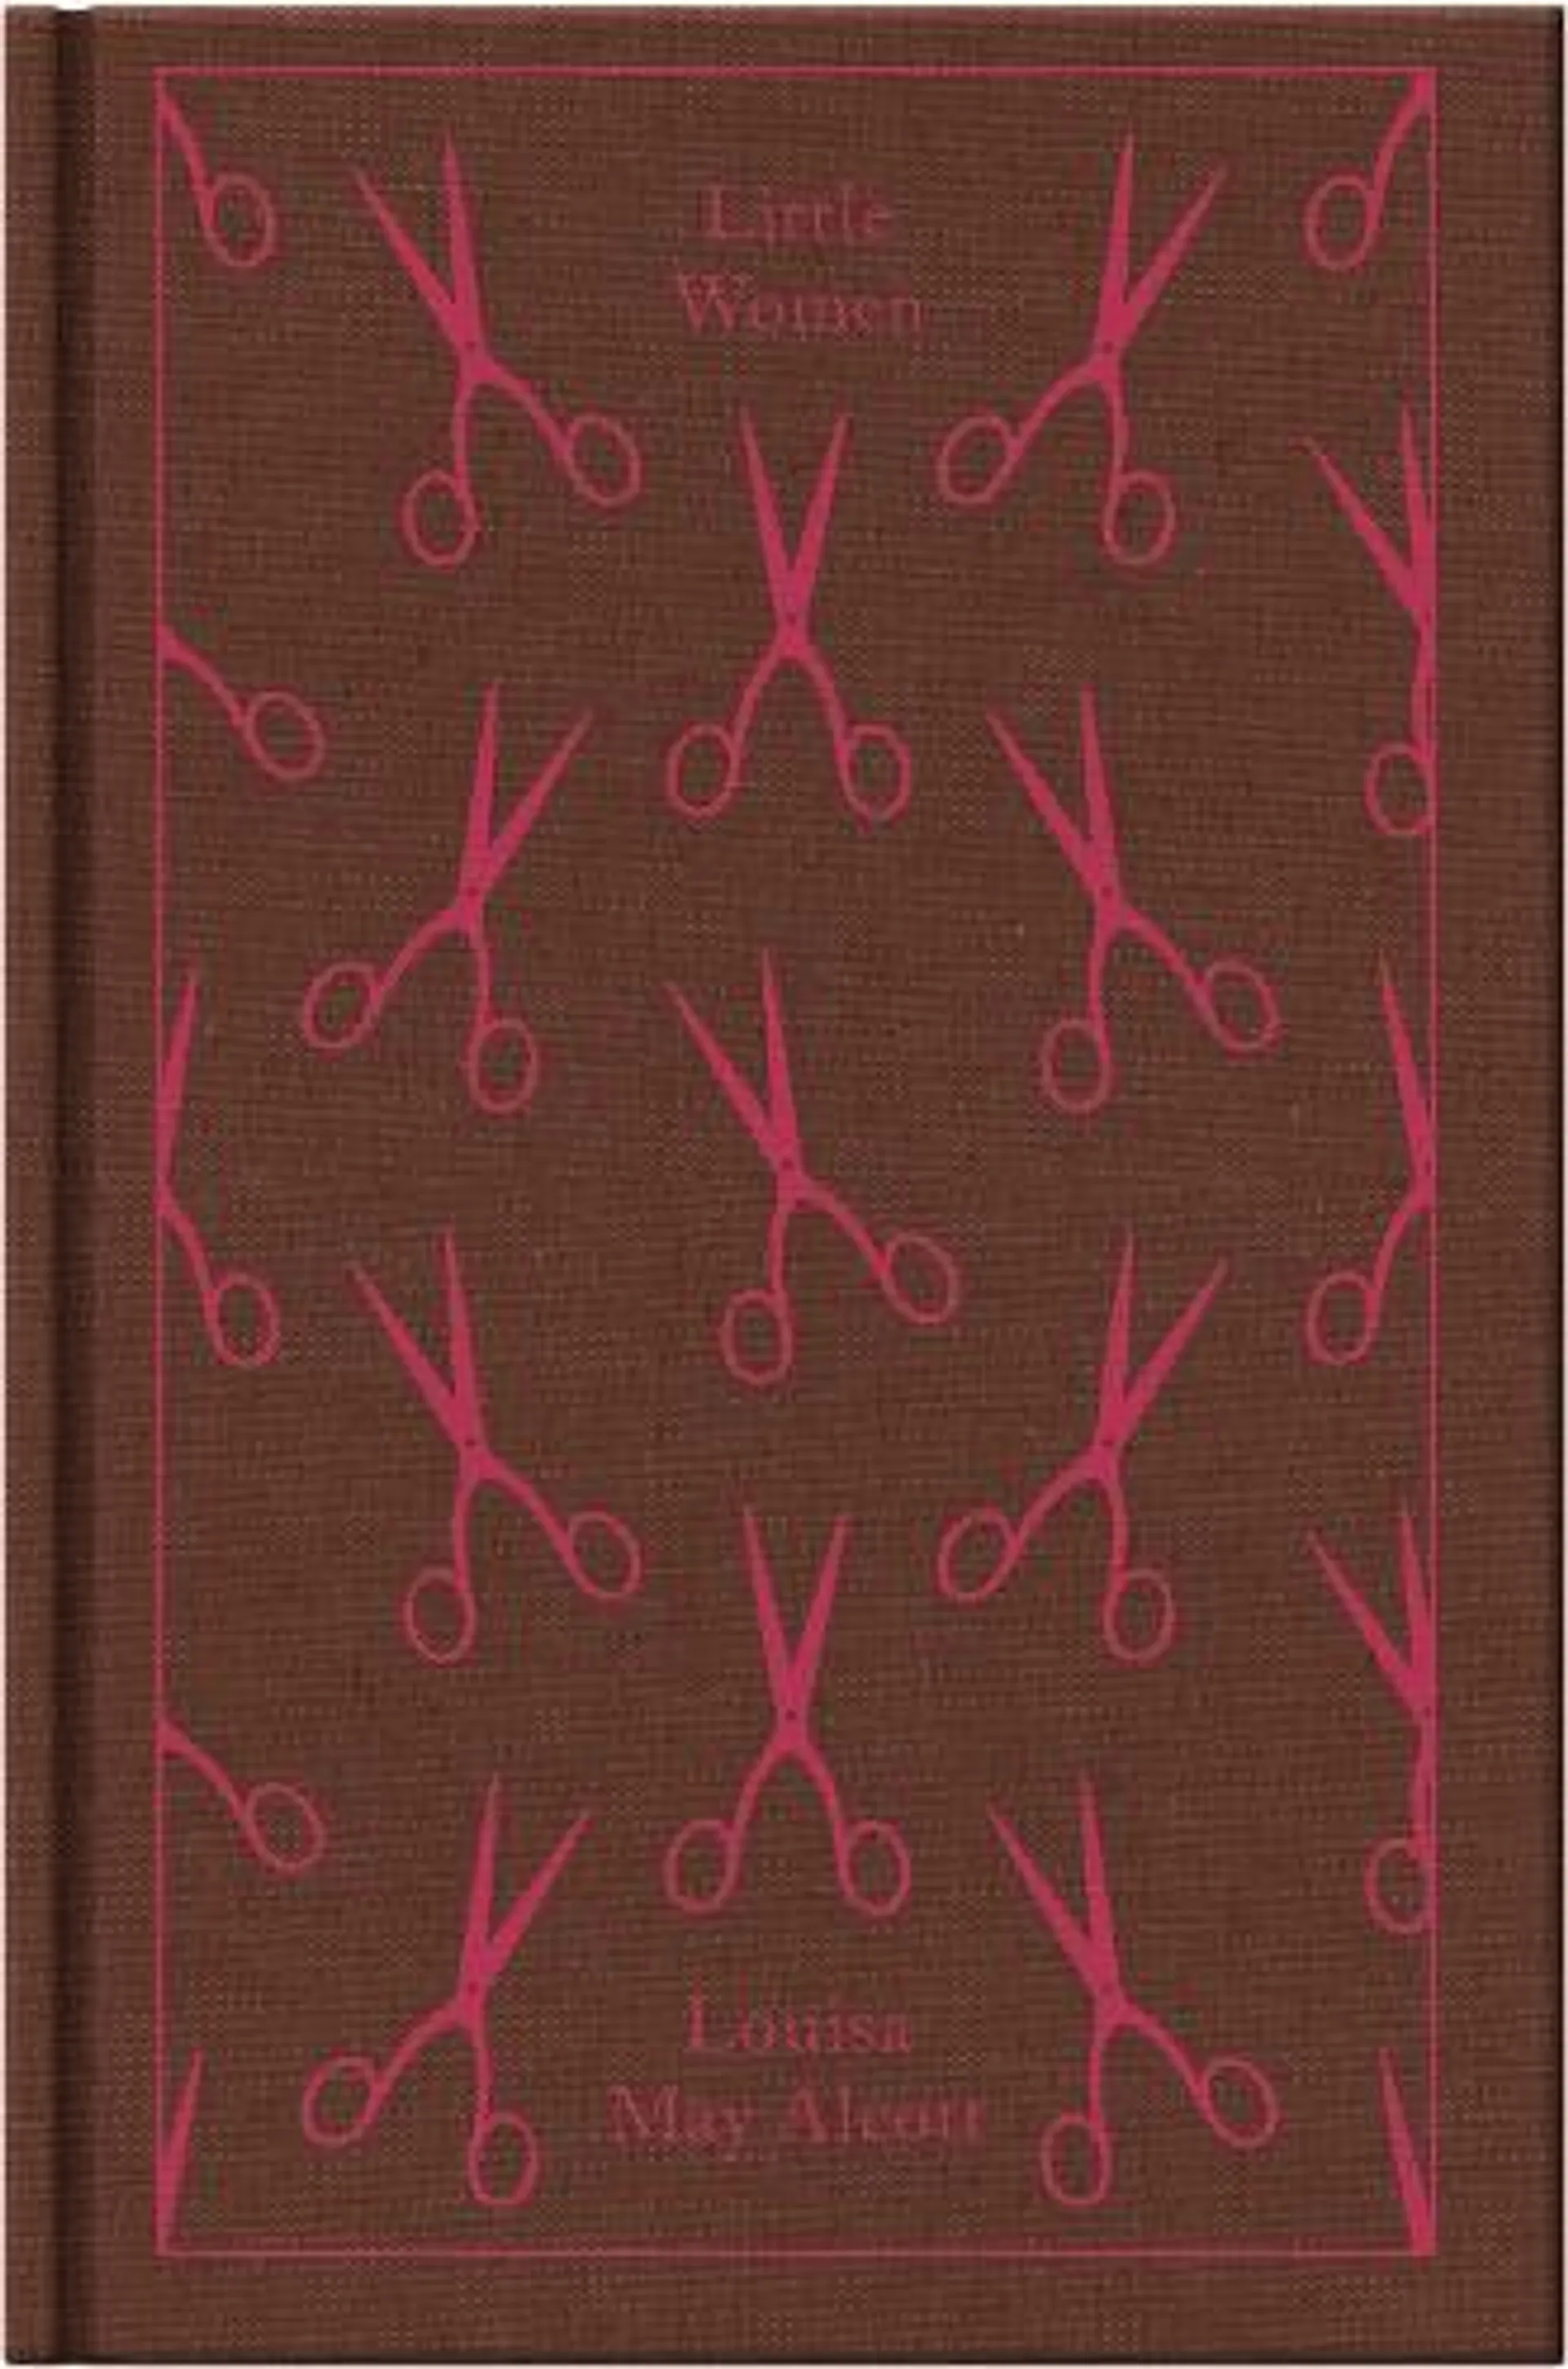 Little Women - Penguin Clothbound Classics (Hardback)